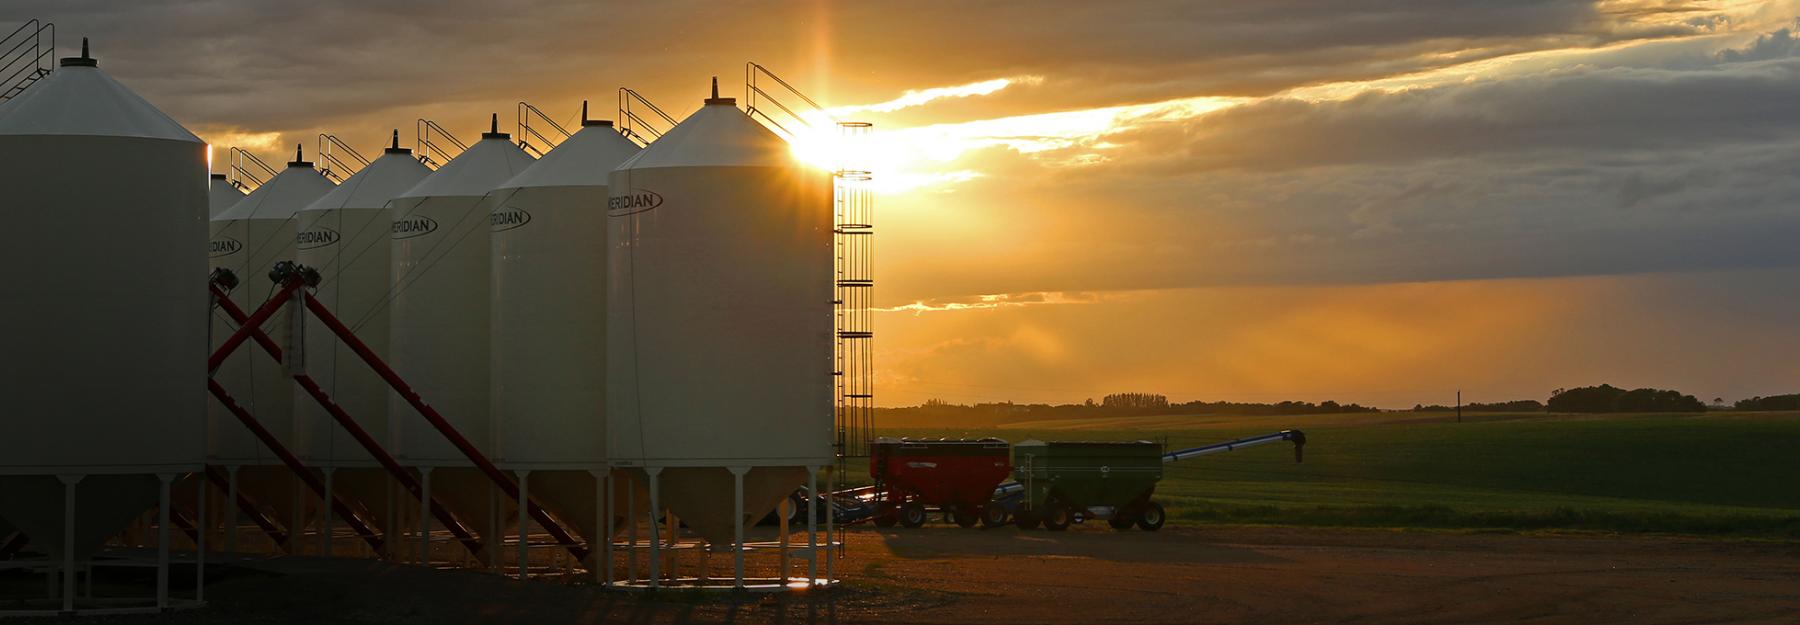 Grain bins and farm equipment at sunset